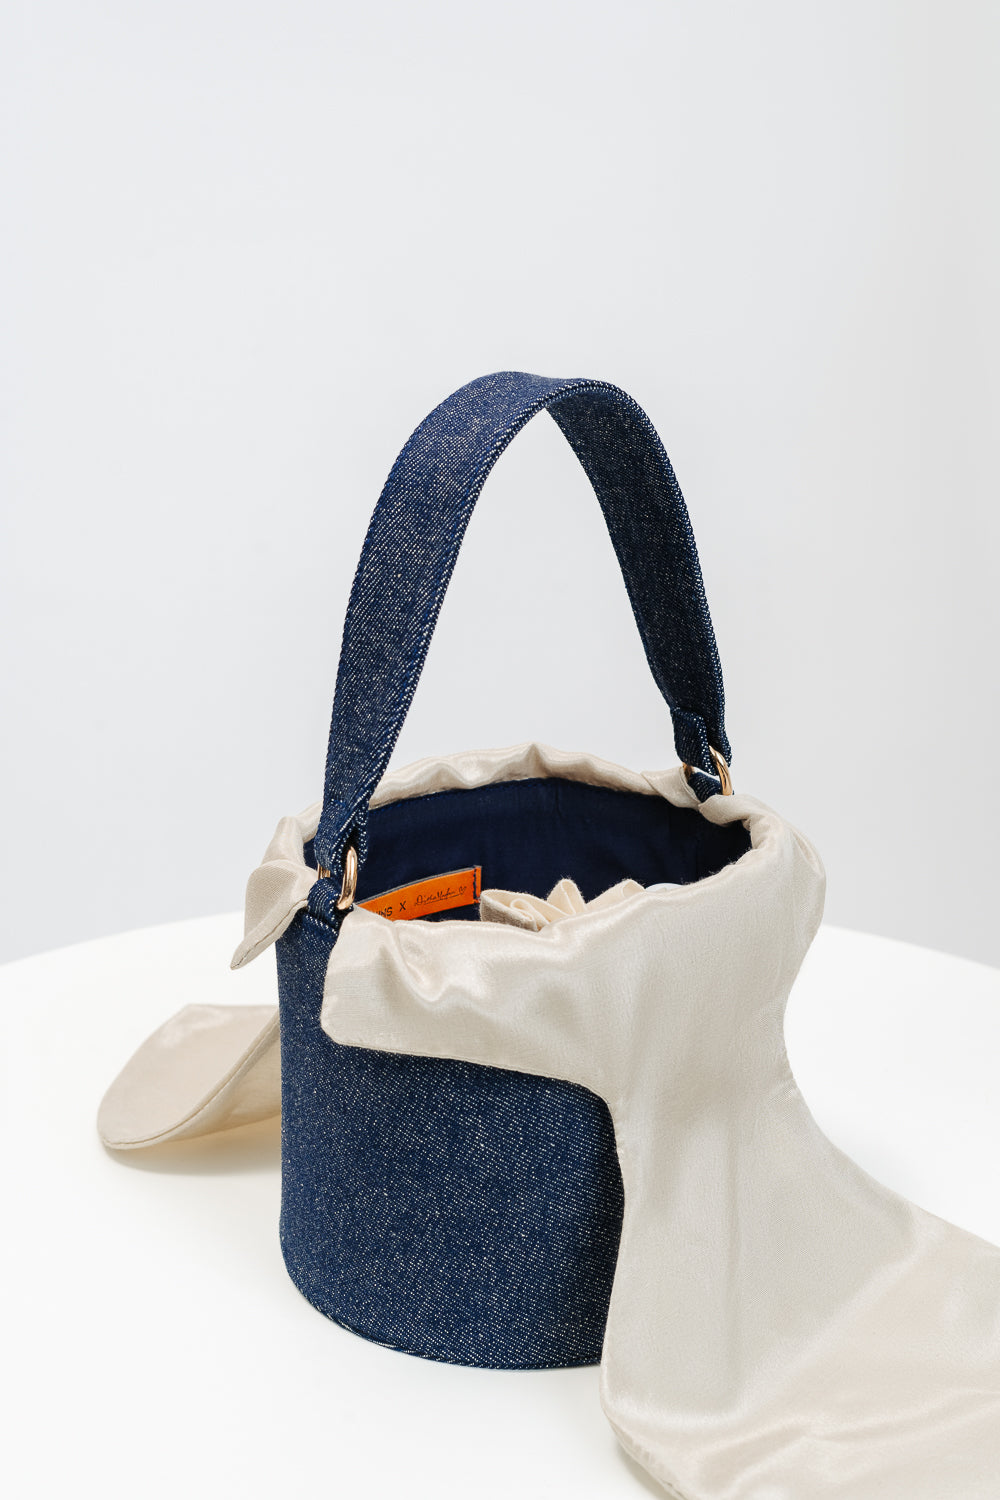 The Blue-Grey Bucket Bag